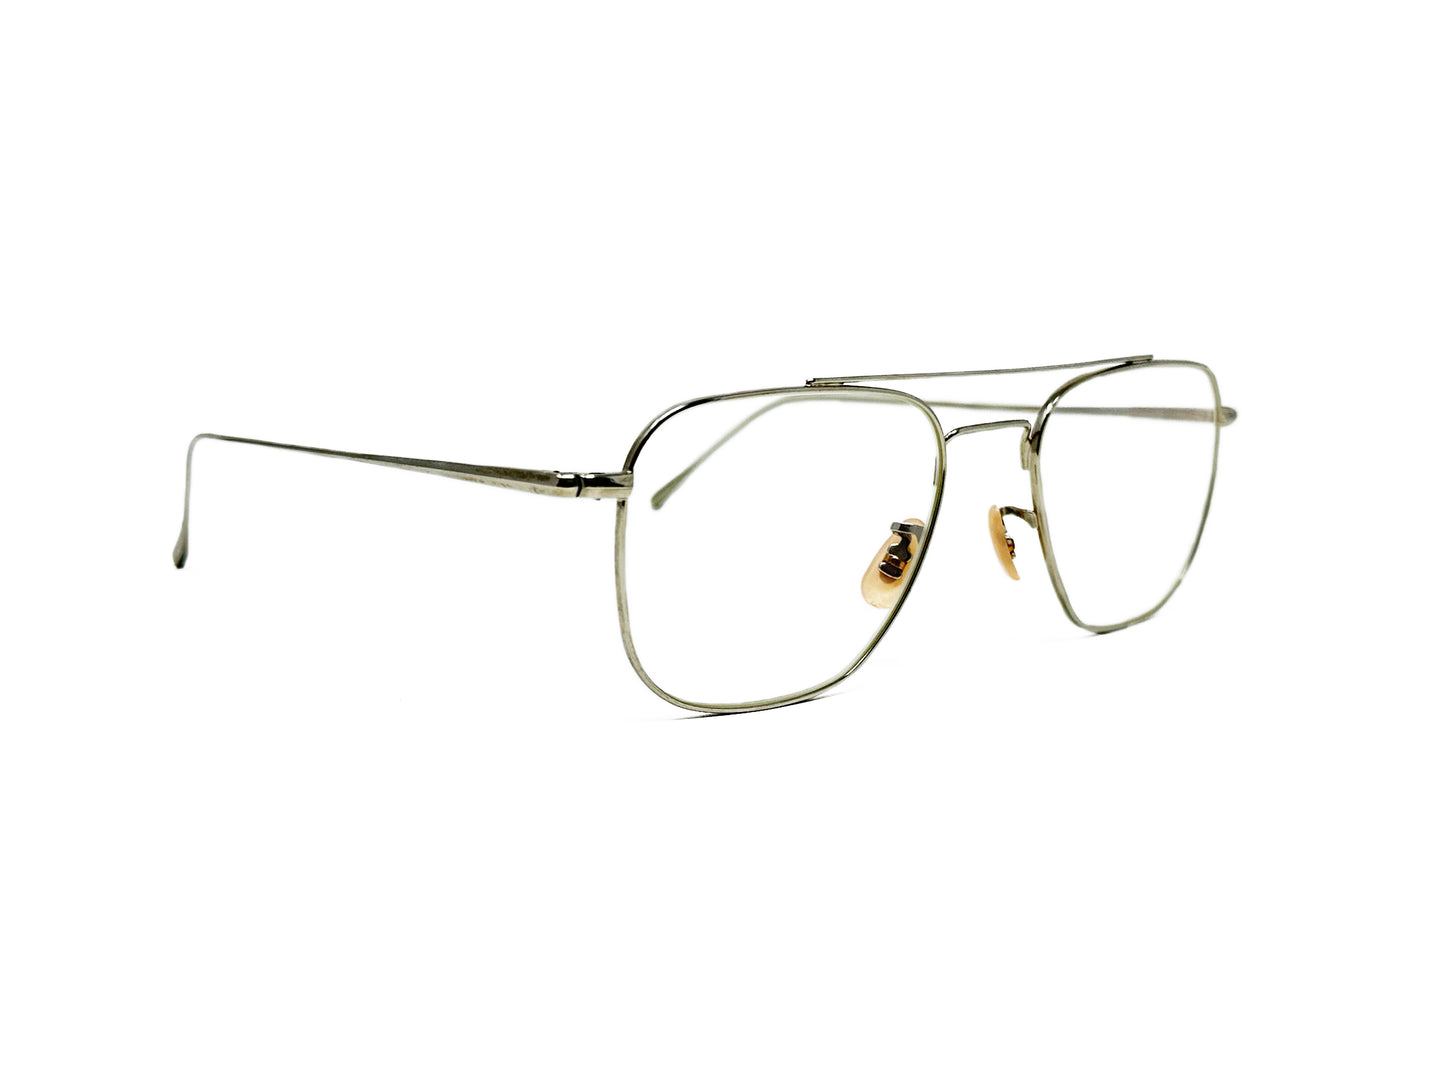 Kala Eyewear square aviator style metal optical frame. Model: Kingston. Color: Silver. Side view.